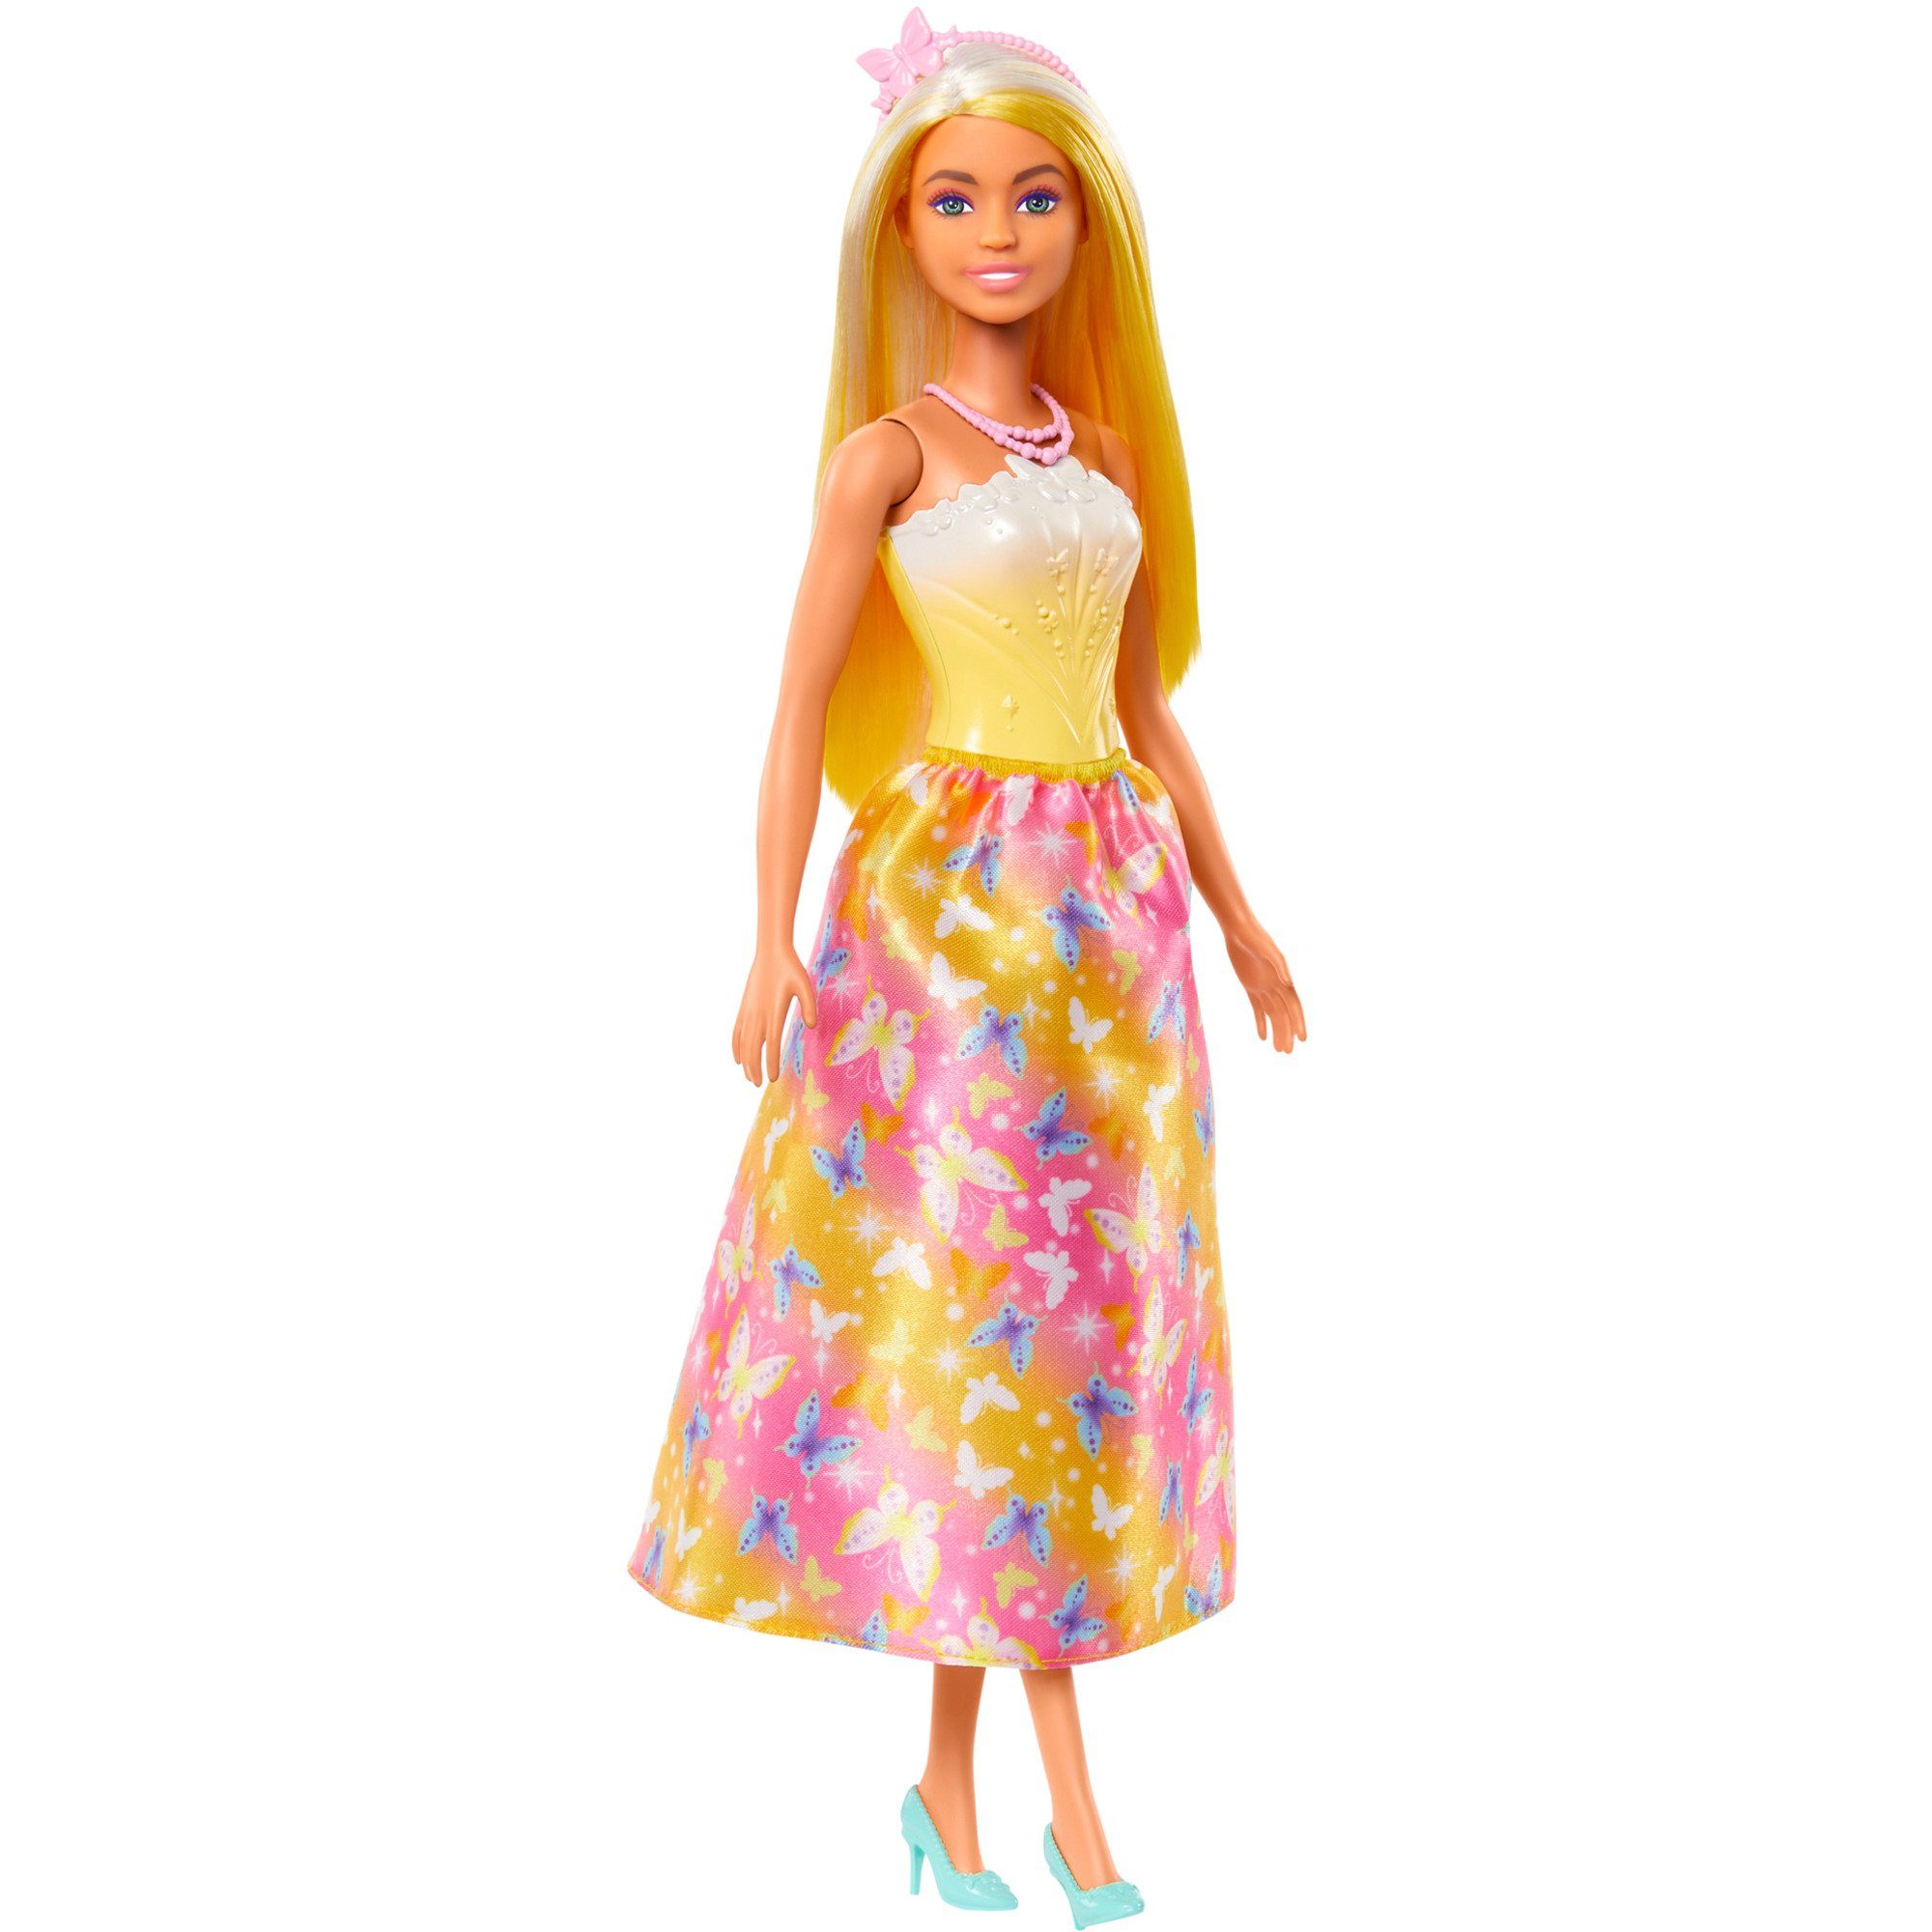 Mattel® Babypuppe Barbie Dreamtopia royale Puppe